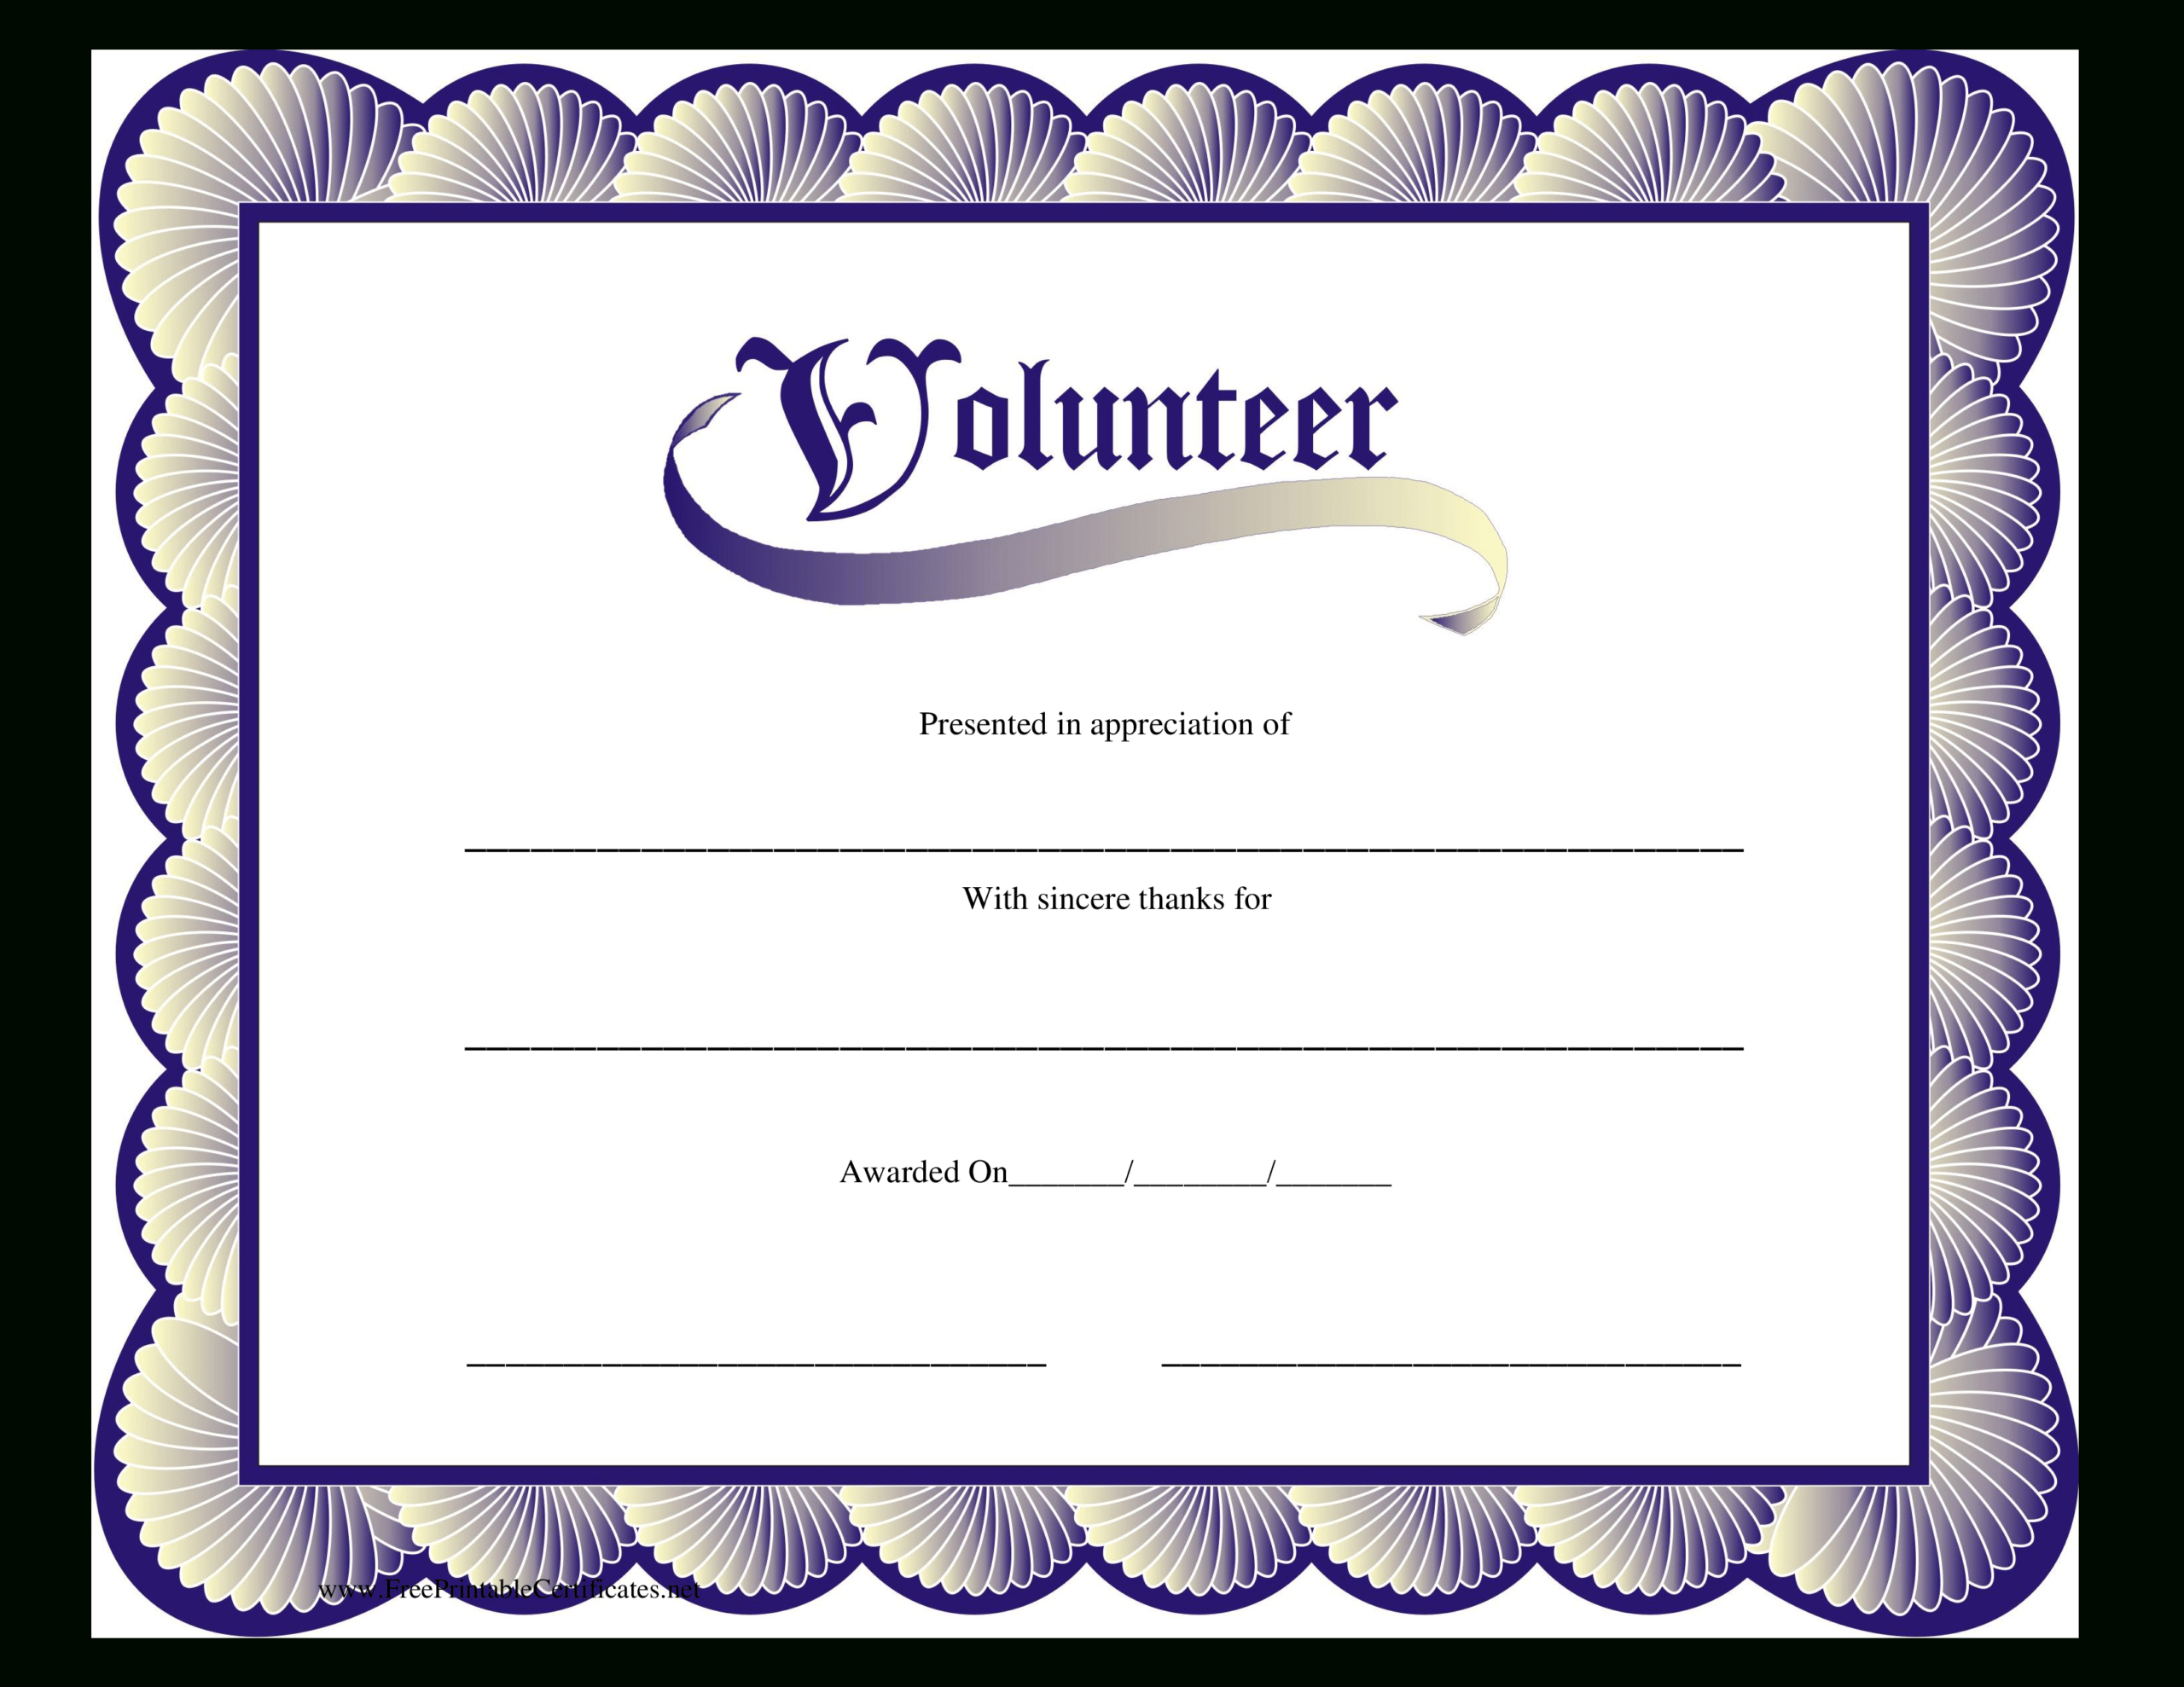 Volunteer Certificate | Templates At Allbusinesstemplates For Volunteer Certificate Template